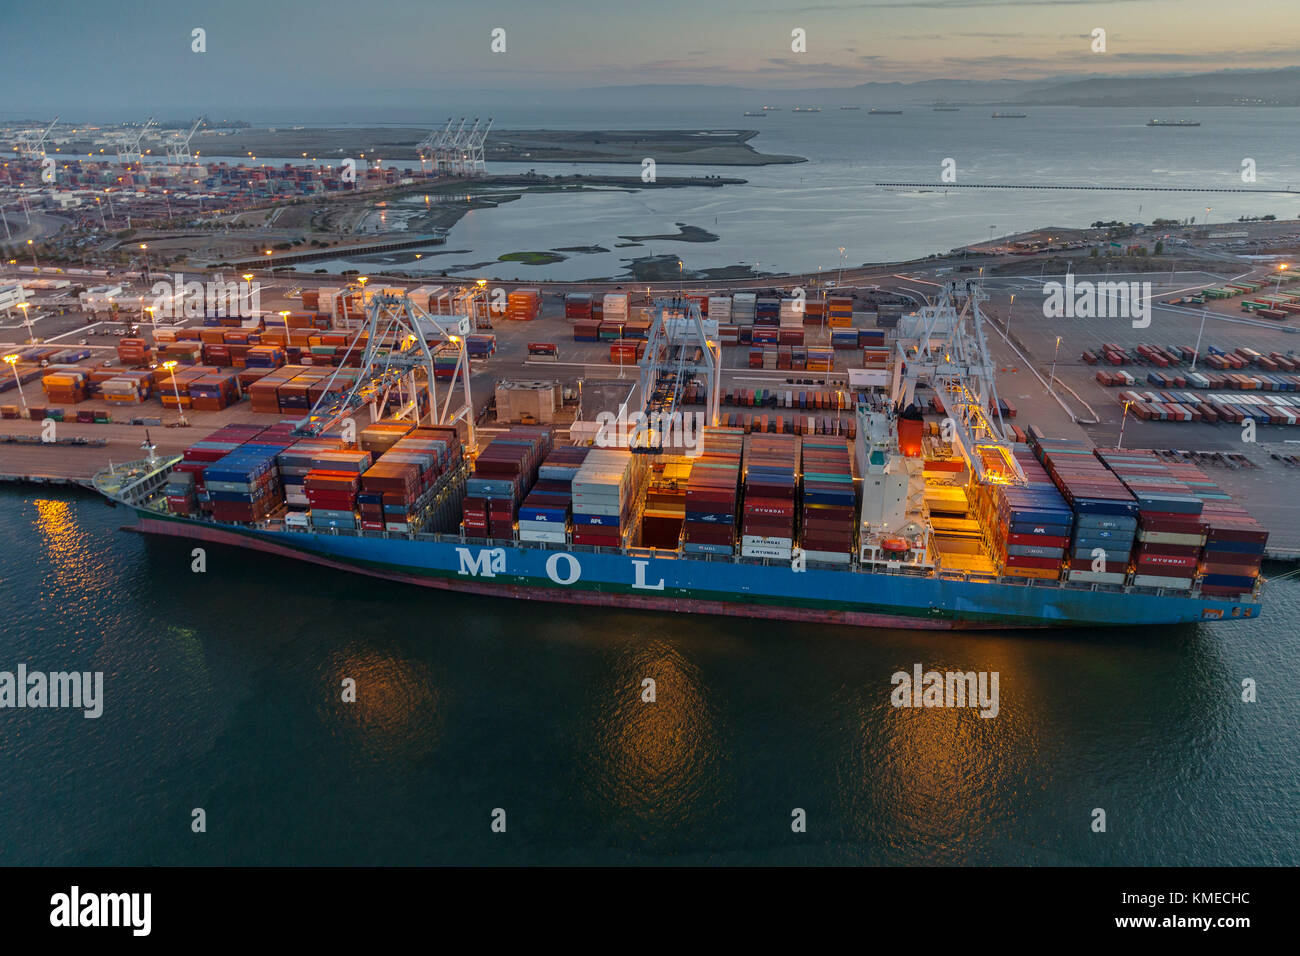 Commercial Dock mit Container schiff bei Sonnenuntergang, Oakland, Kalifornien, USA Stockfoto